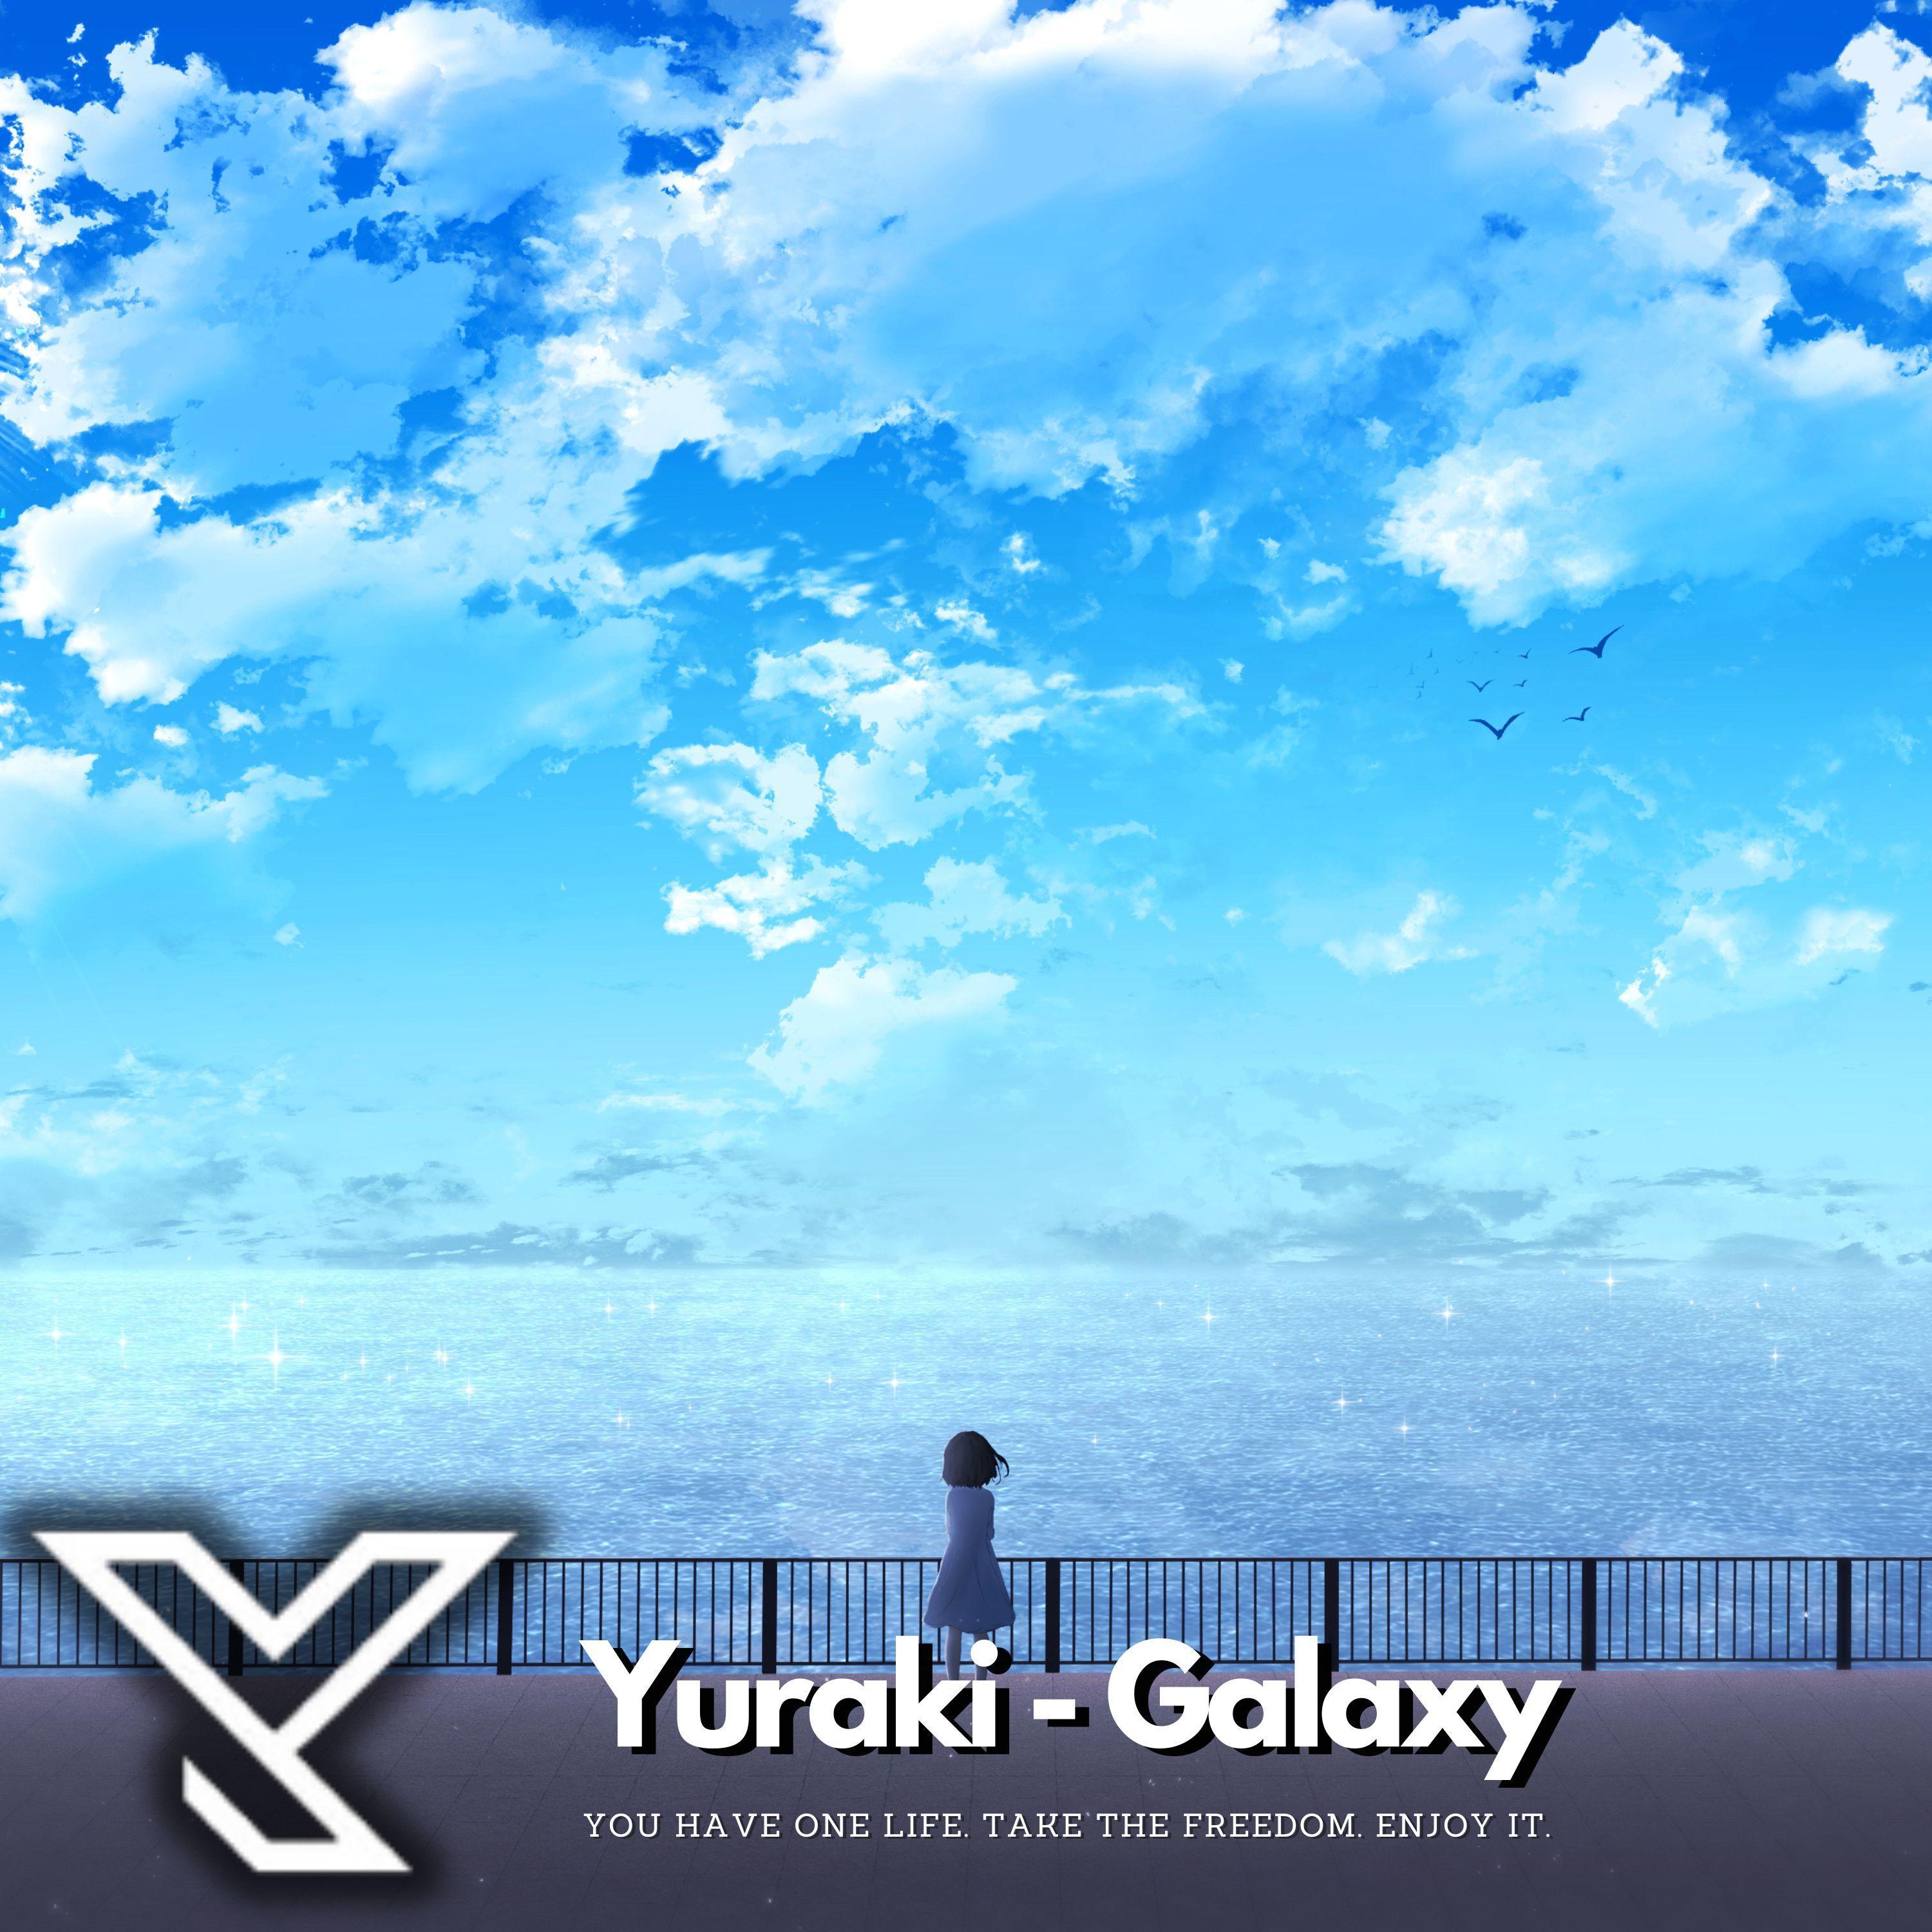 Yuraki - Galaxy